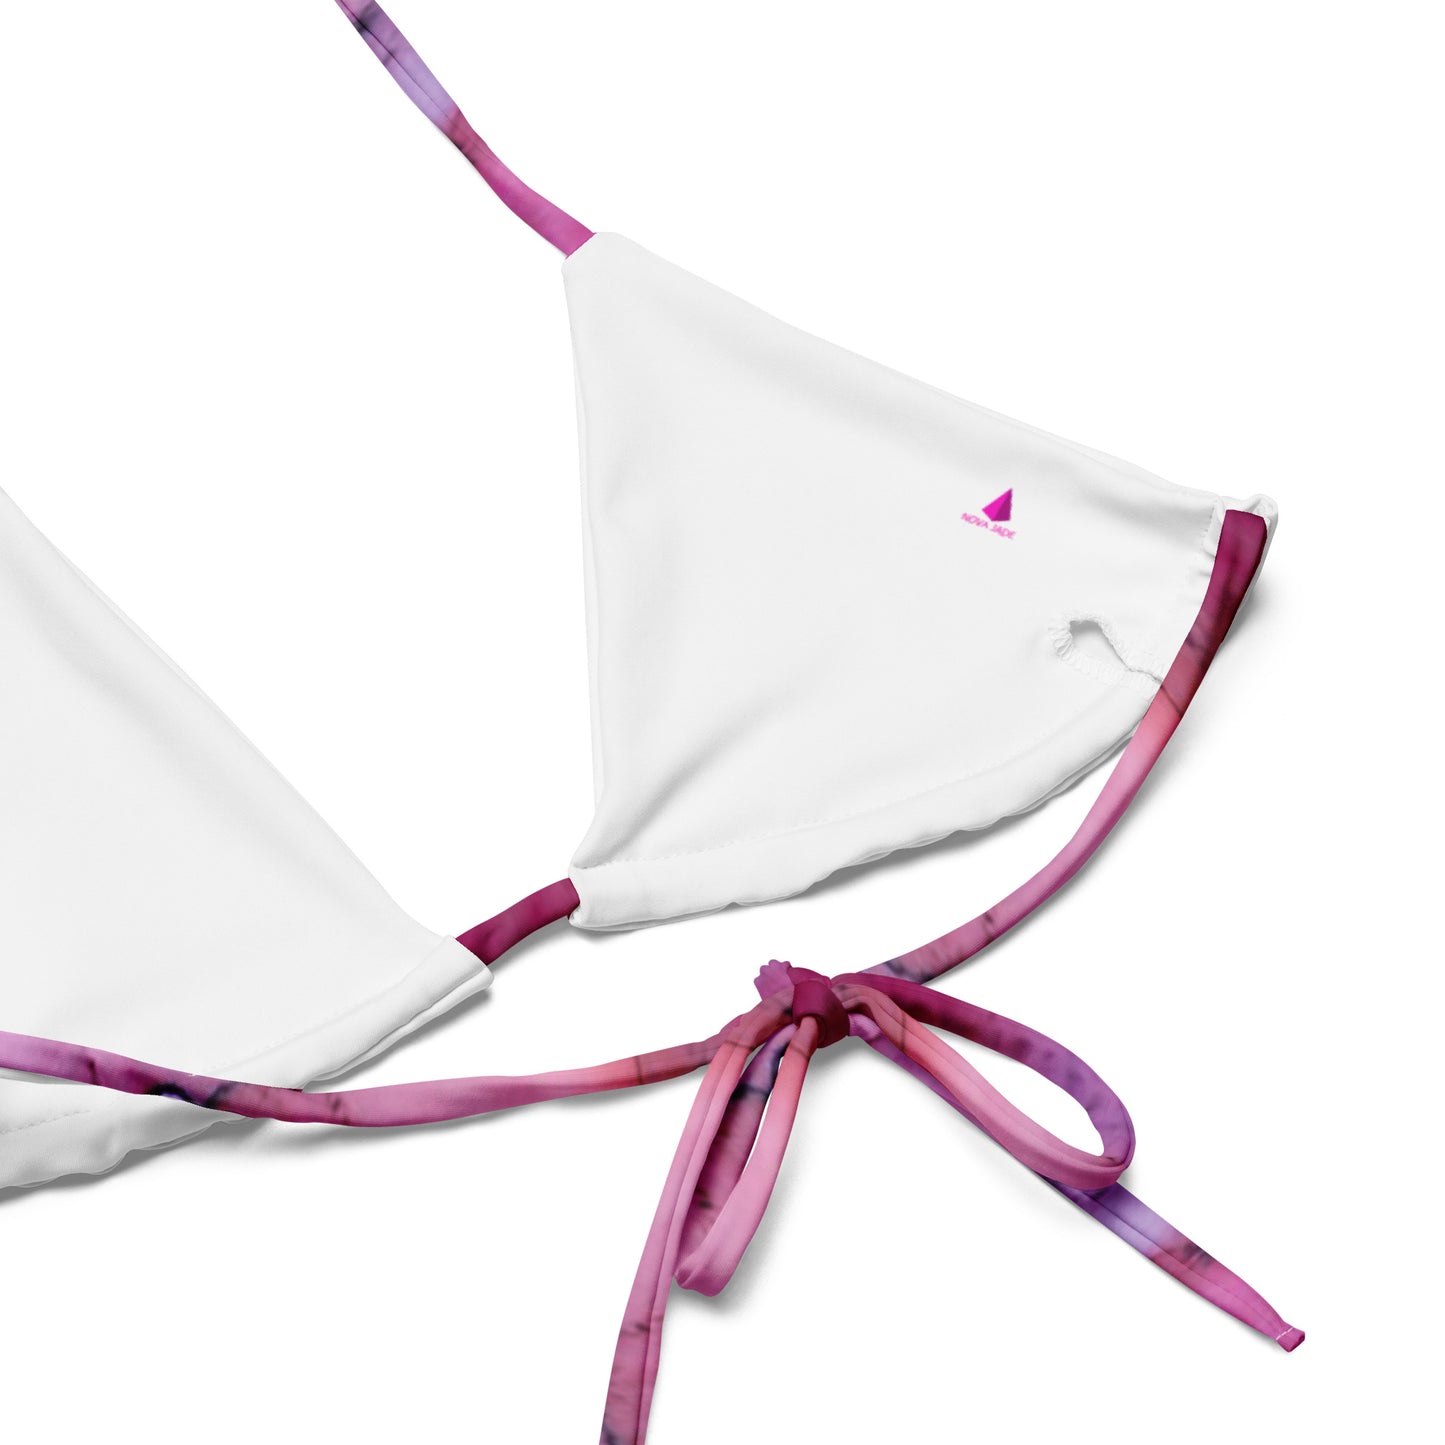 Pink Marble Custom Print String Bikini